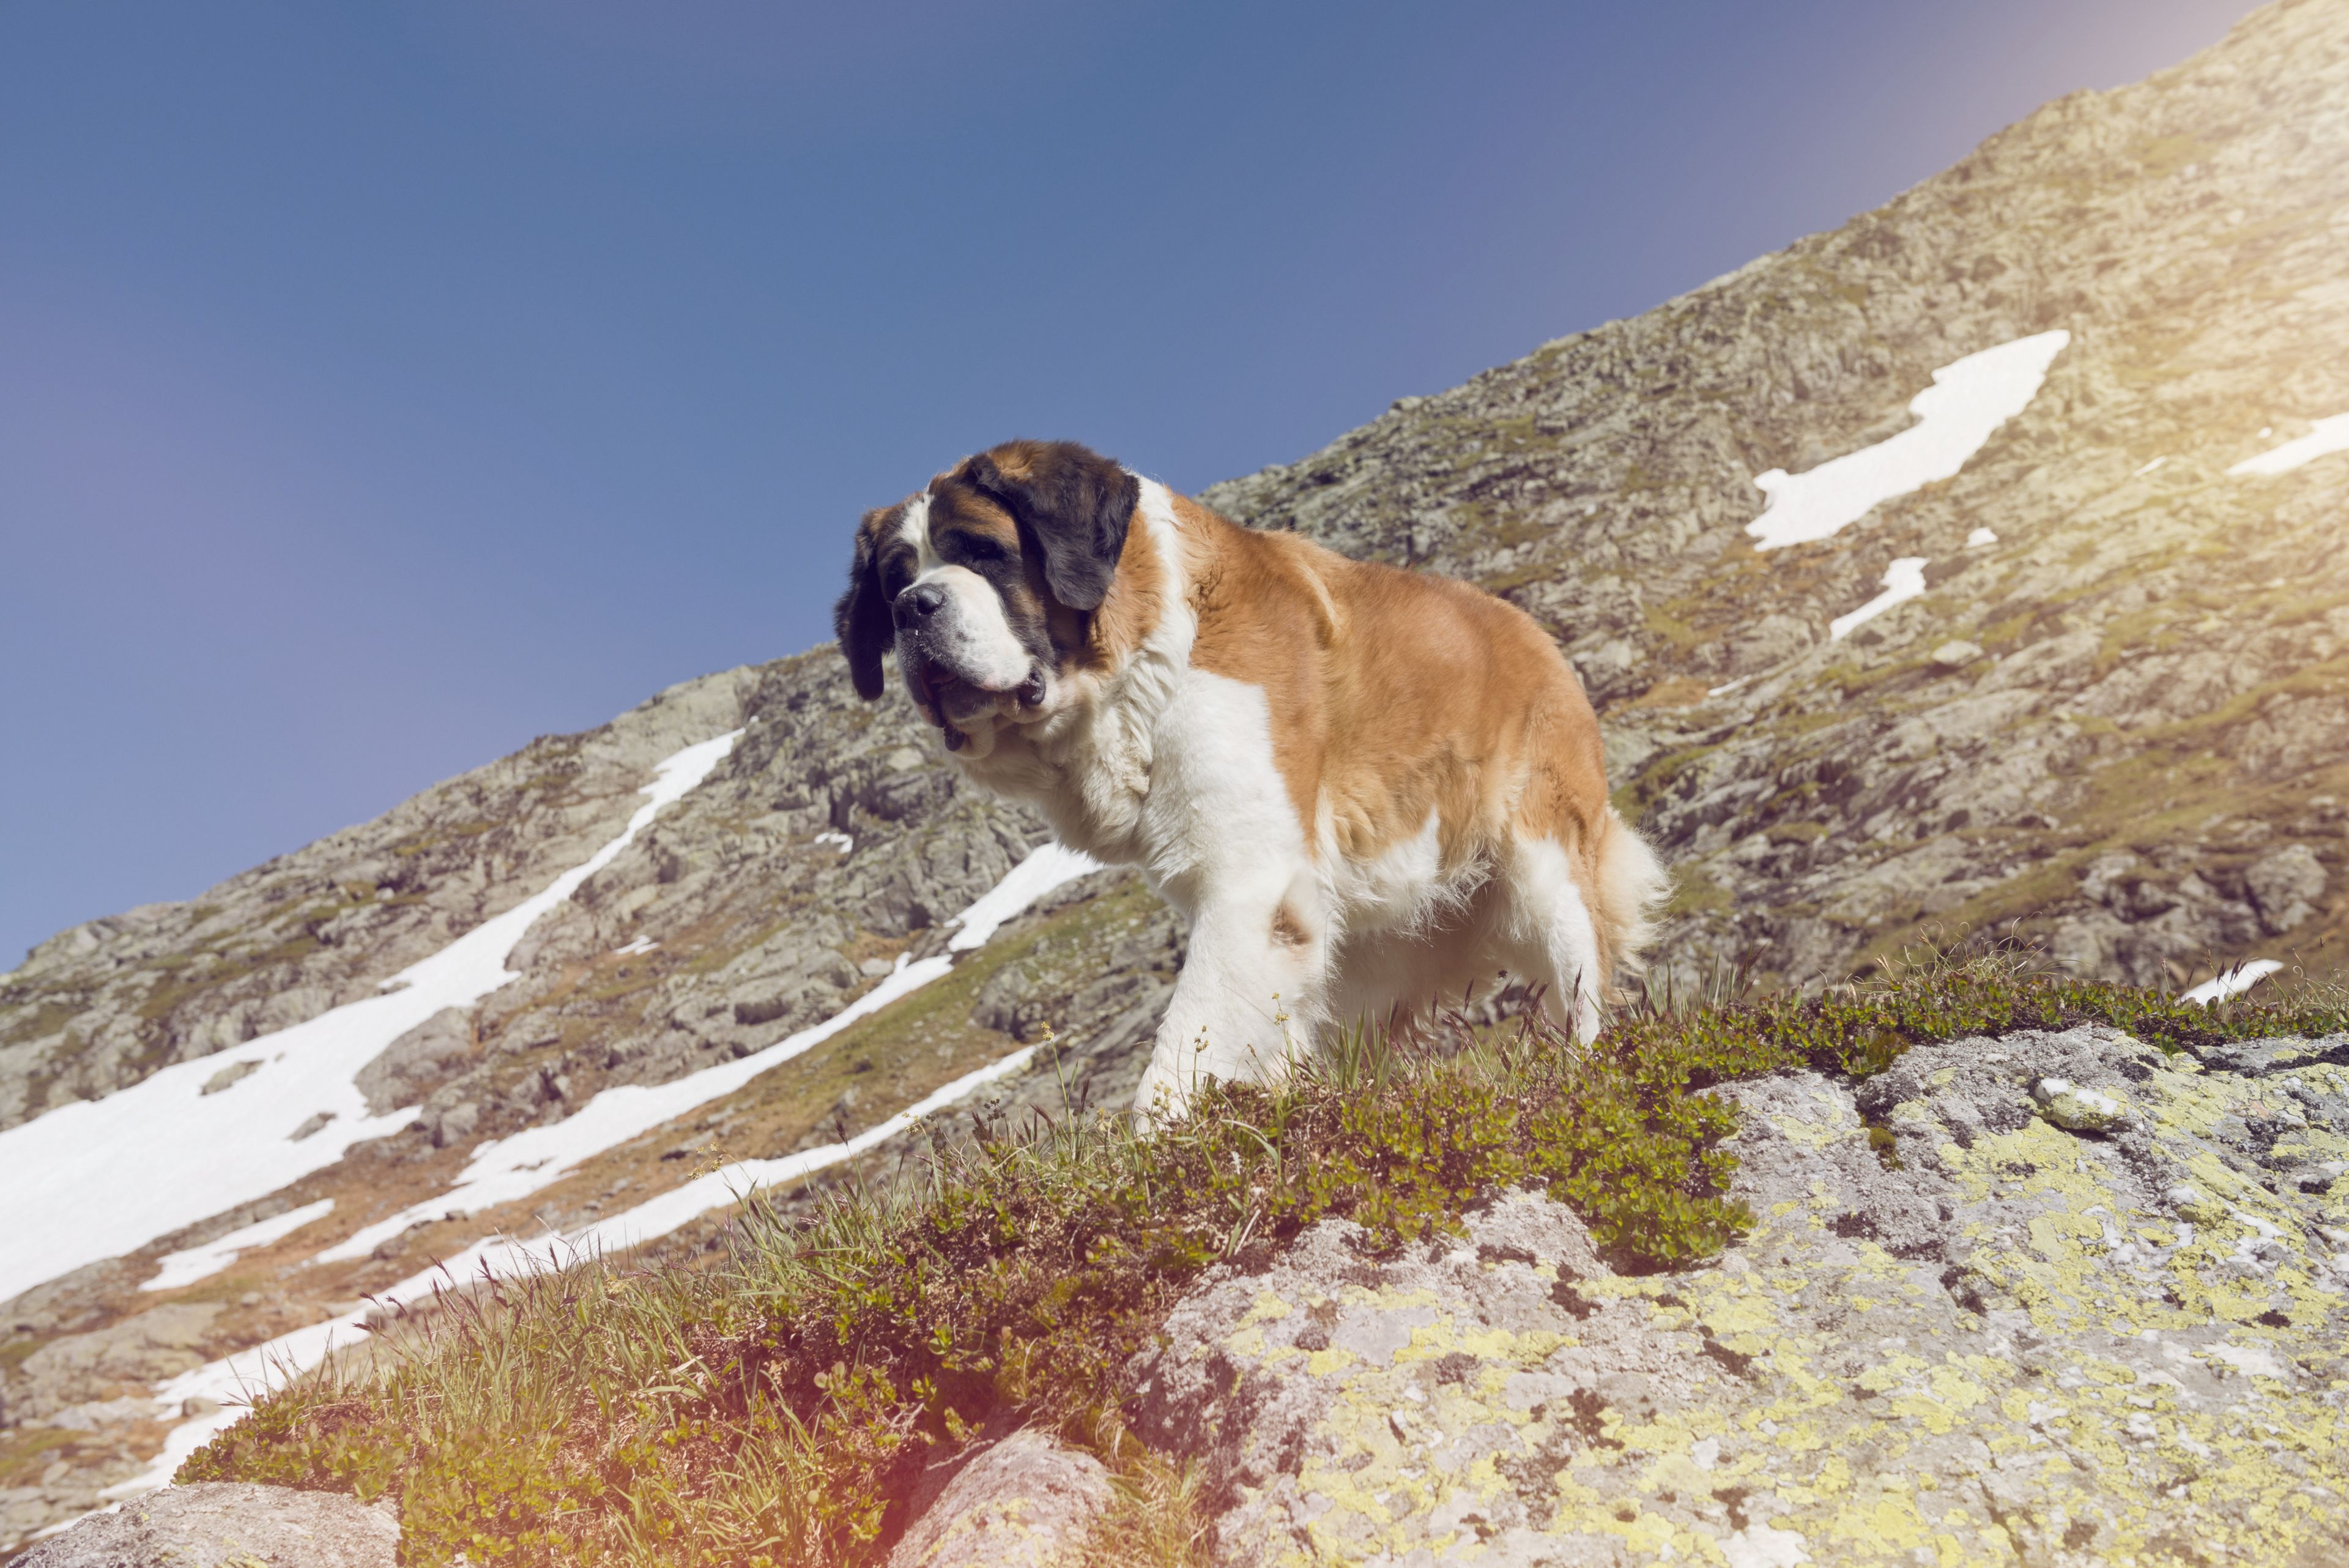 St-Bernard dogs in Valais. Switzerland.